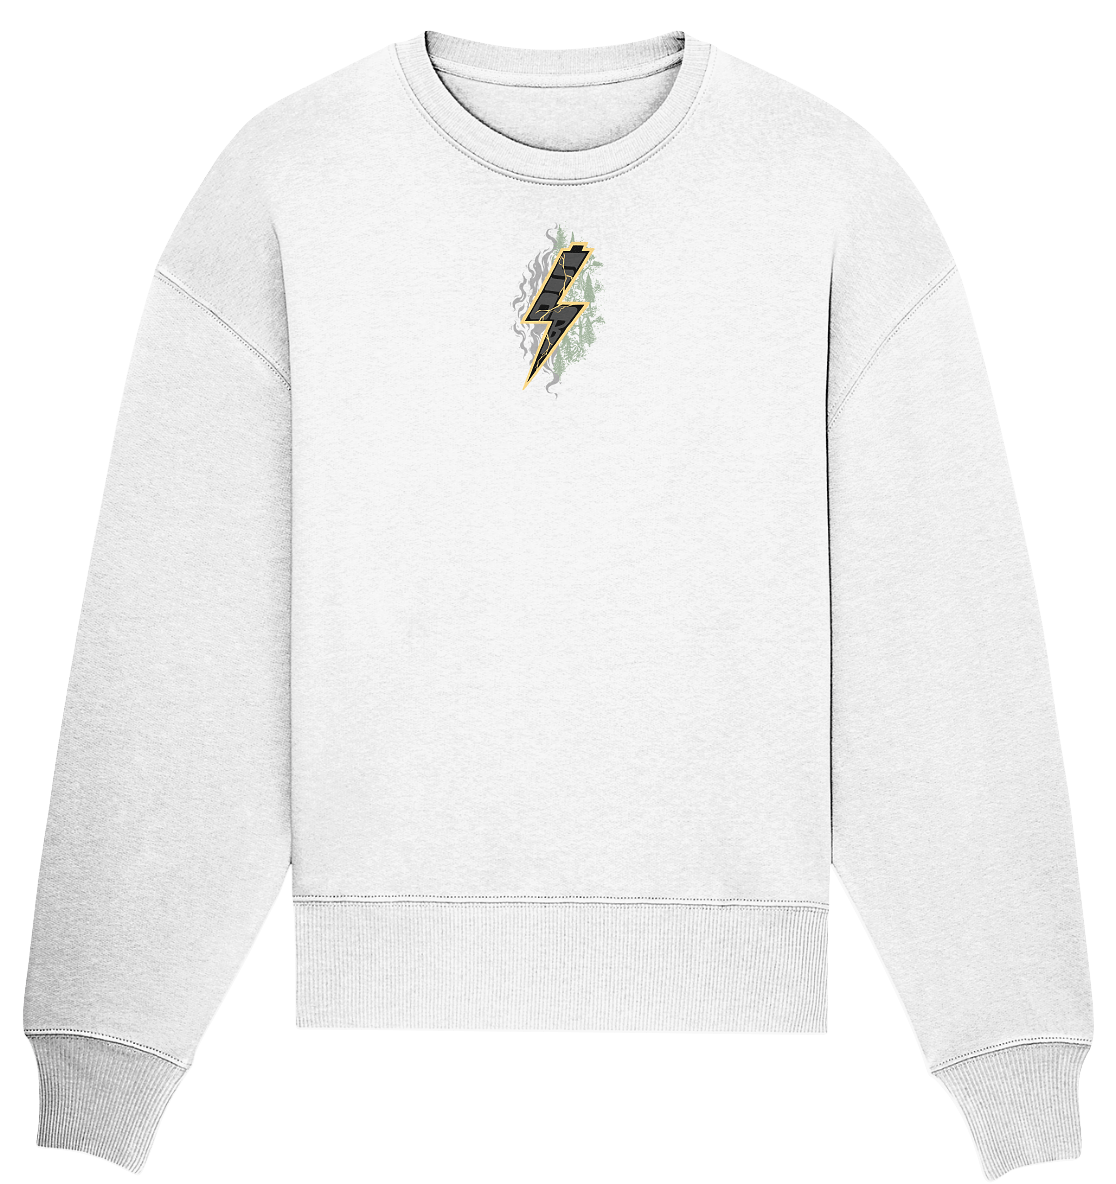 Sons of Battery® - E-MTB Brand & Community Sweatshirts White / S SoB - Shred or Alive - Organic Oversize Sweatshirt E-Bike-Community